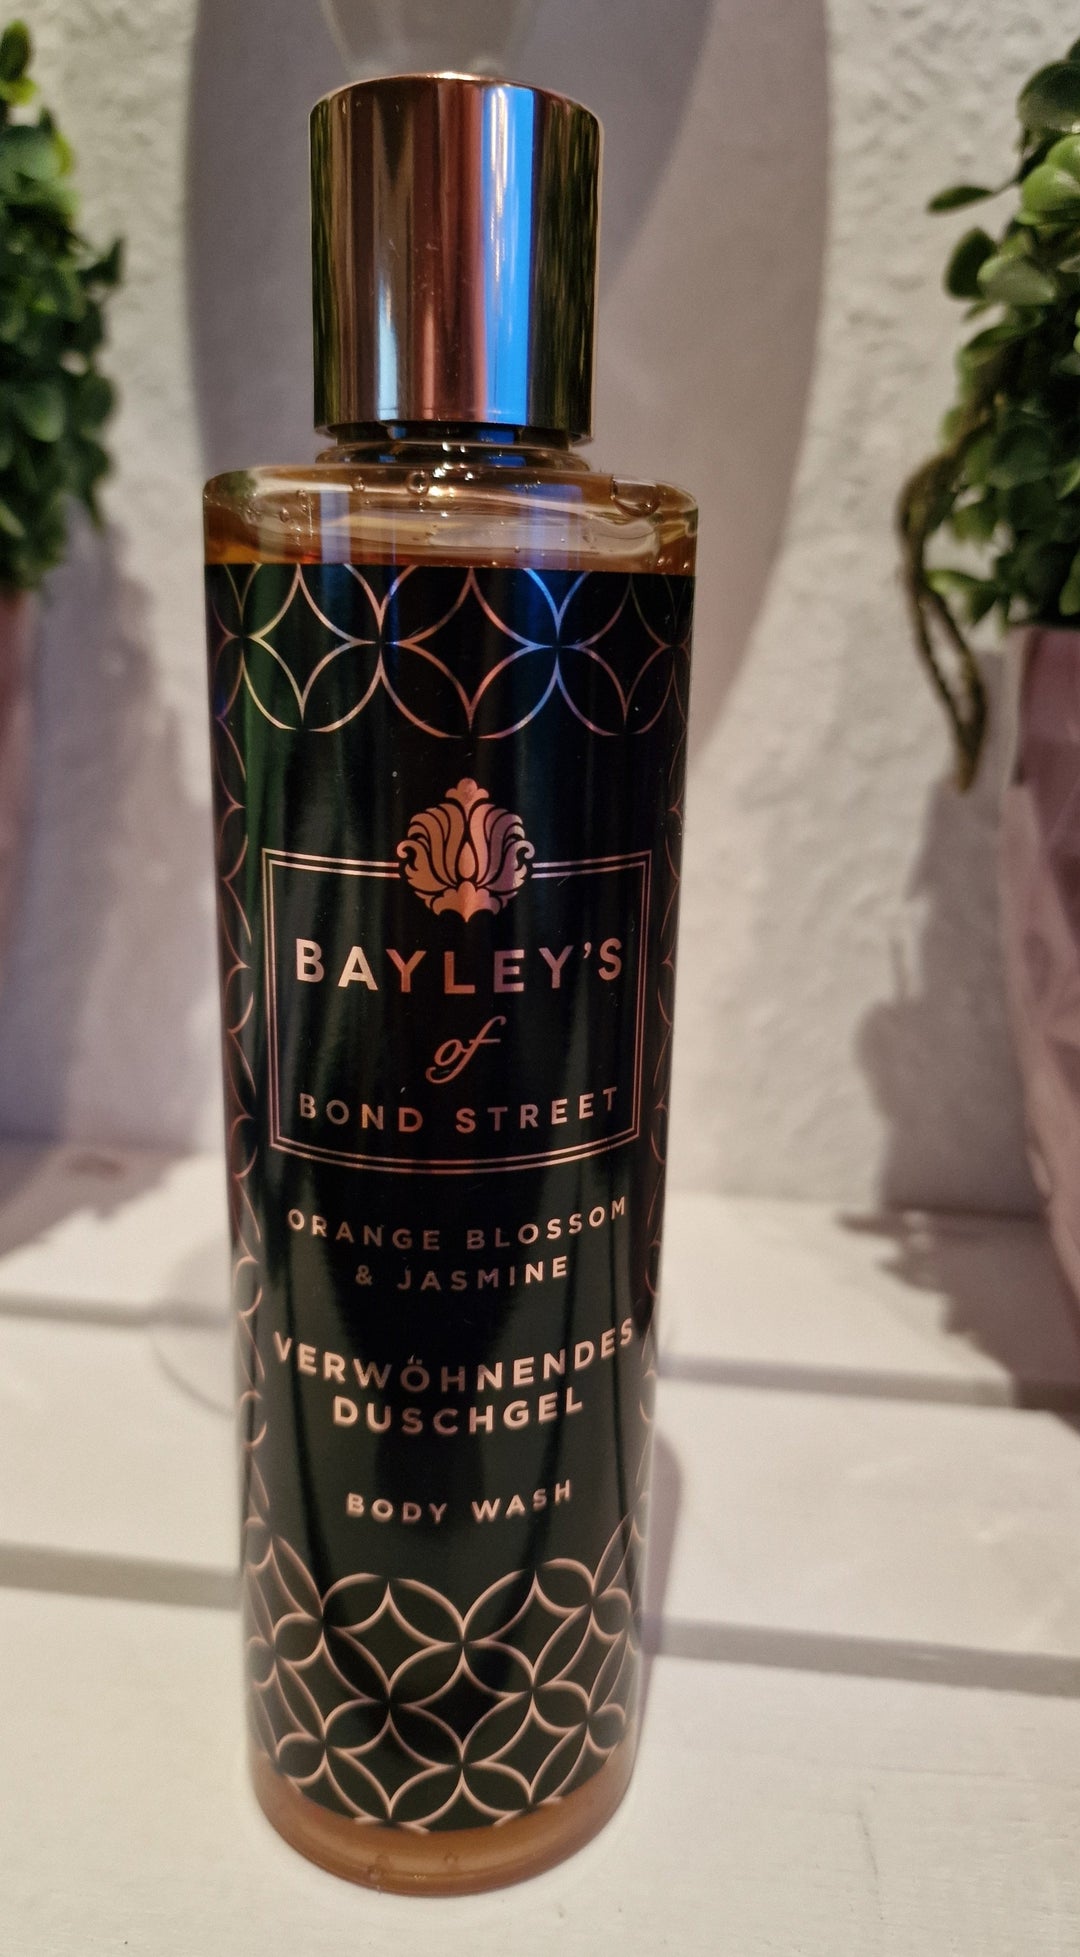 Bayley's of Bond Street verwöhnendes Duschgel"Orange Blossom & Jasmine"